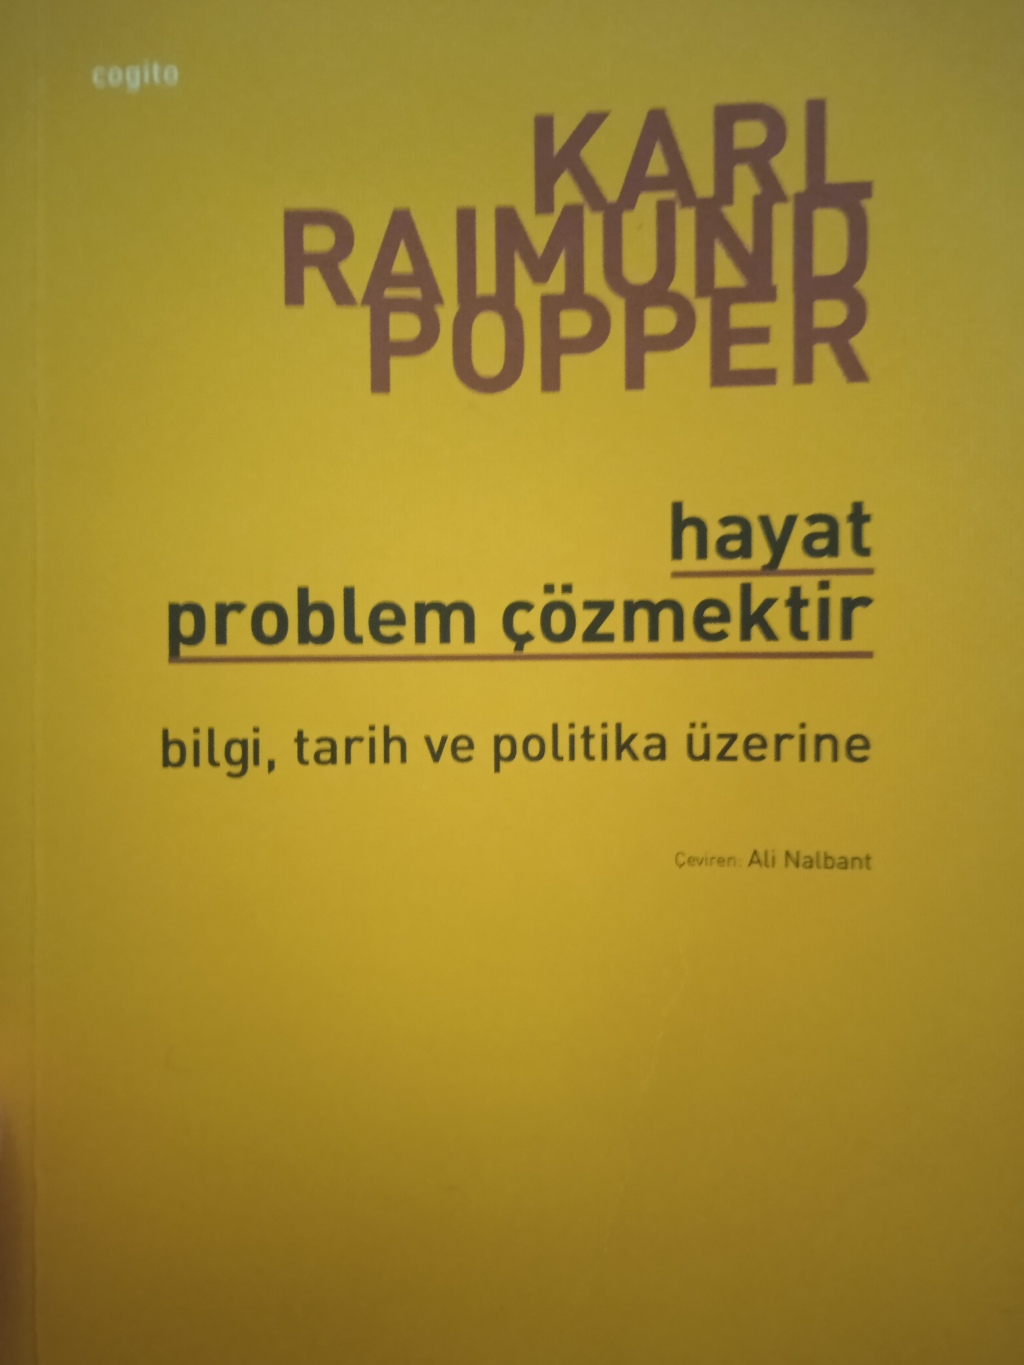 Karl Raimund Popper / Hayat Problem Çözmektir